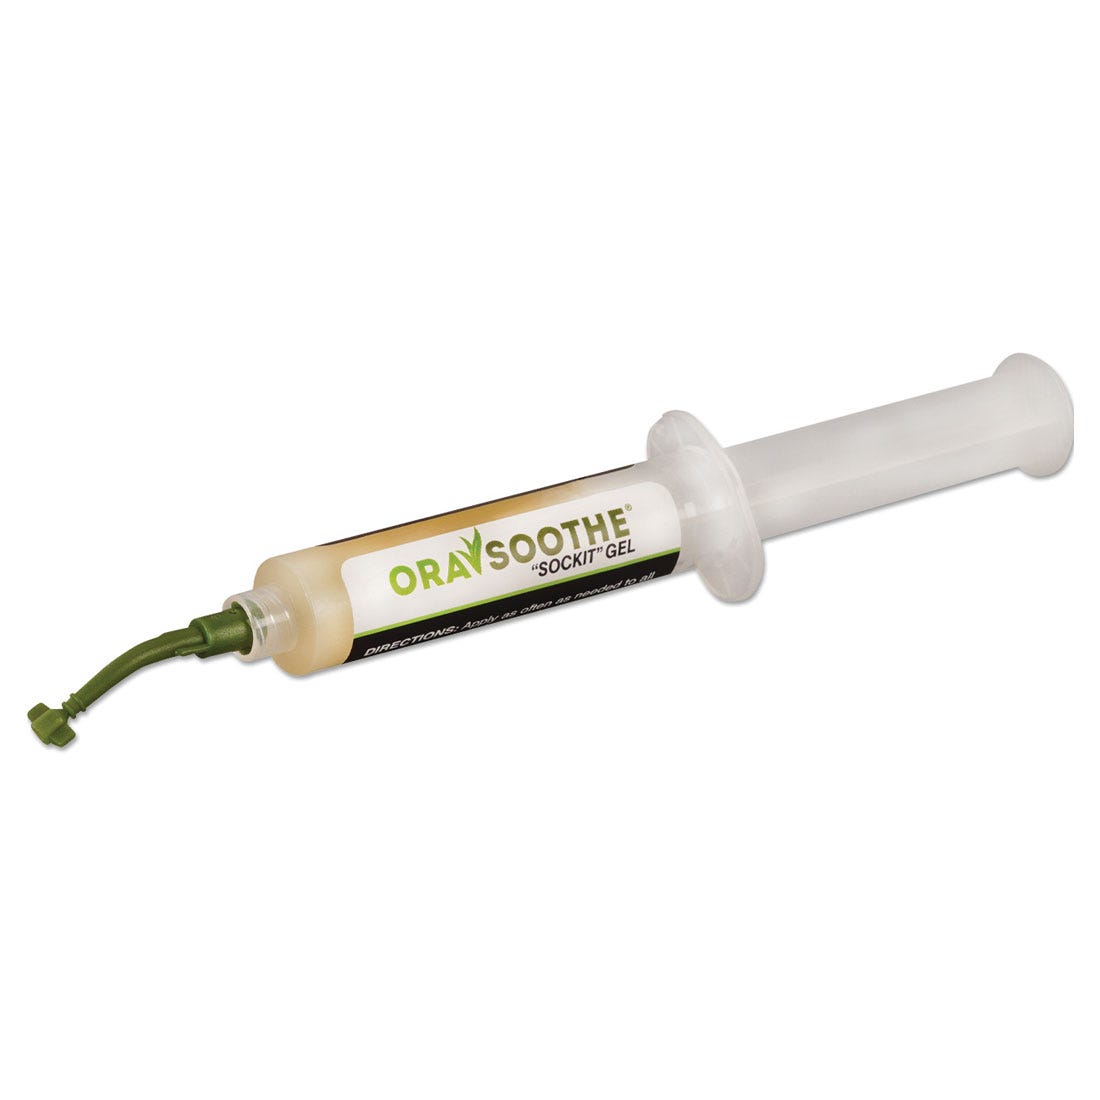 OraSoothe® Sockit Gel, 10g syringe- 5/Box